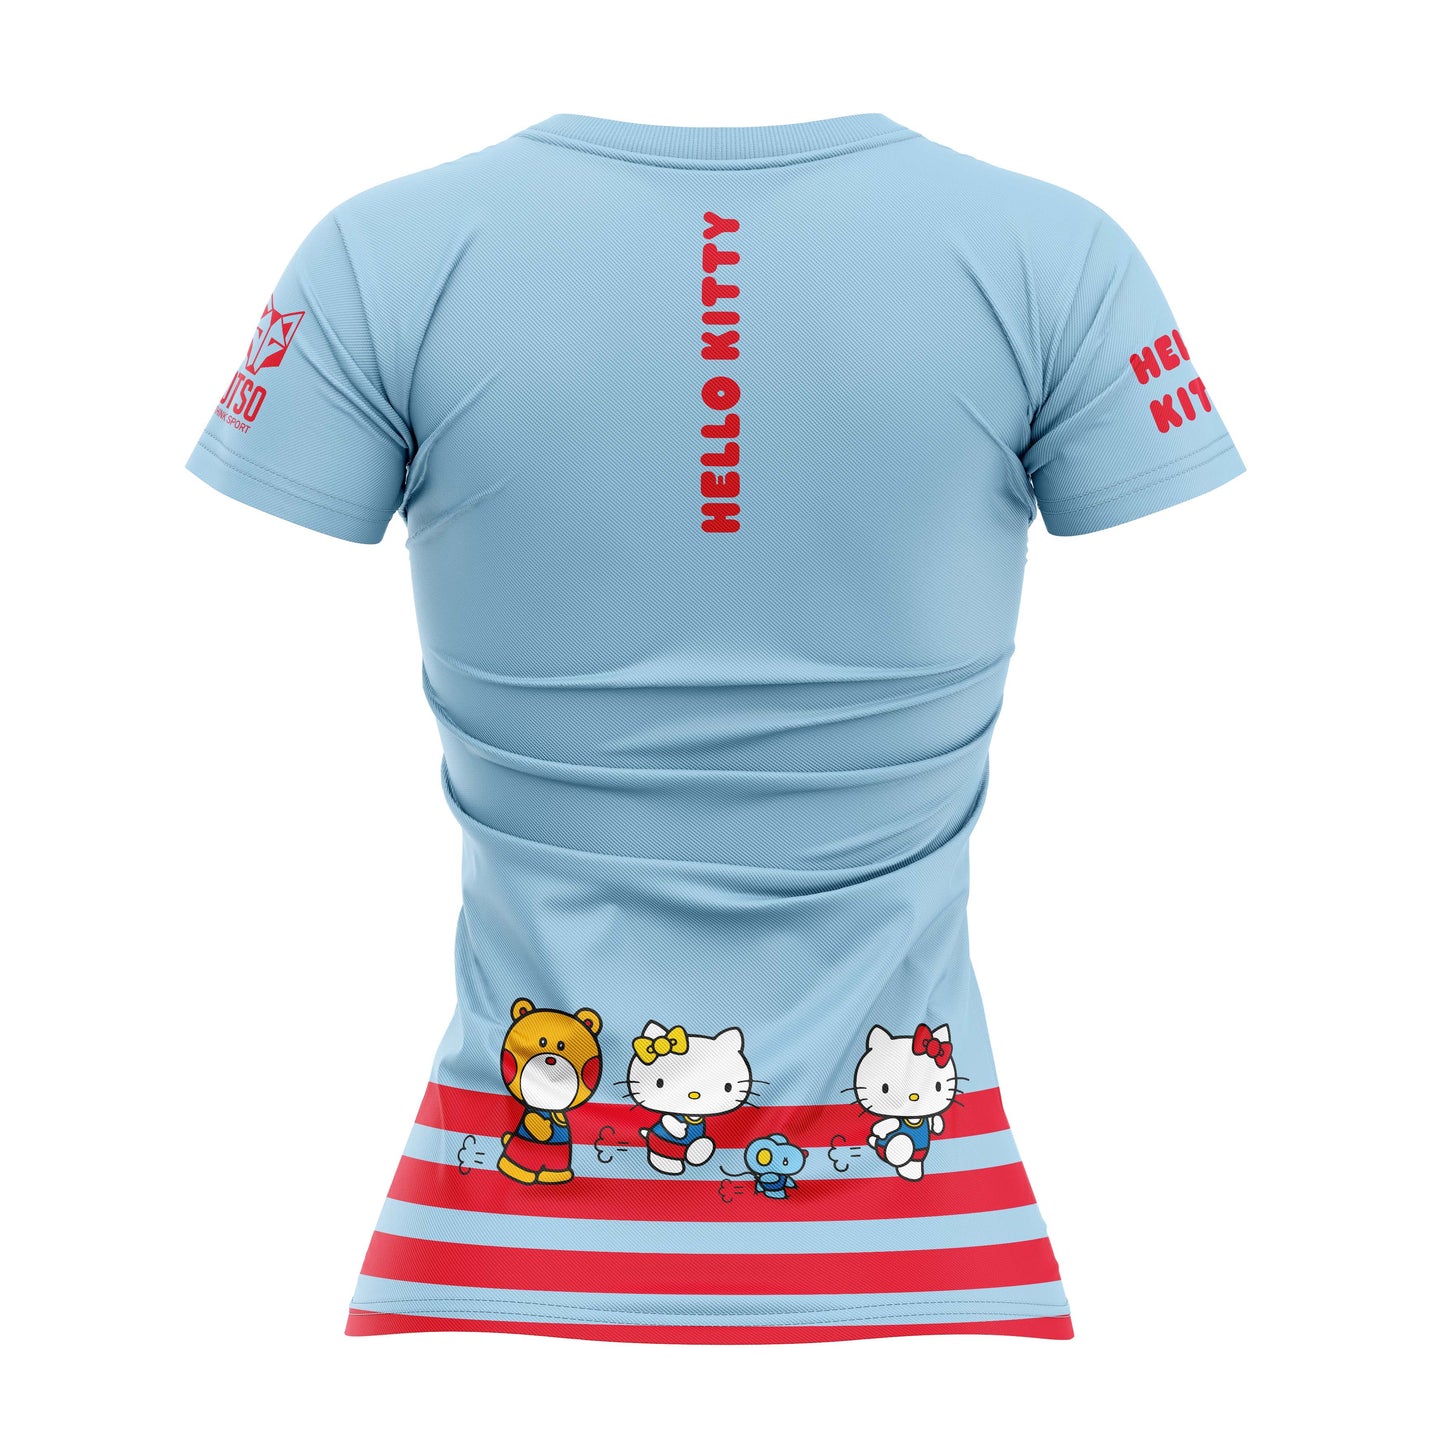 T-shirt de manga curta para meninas e mulheres - Hello Kitty Stripes